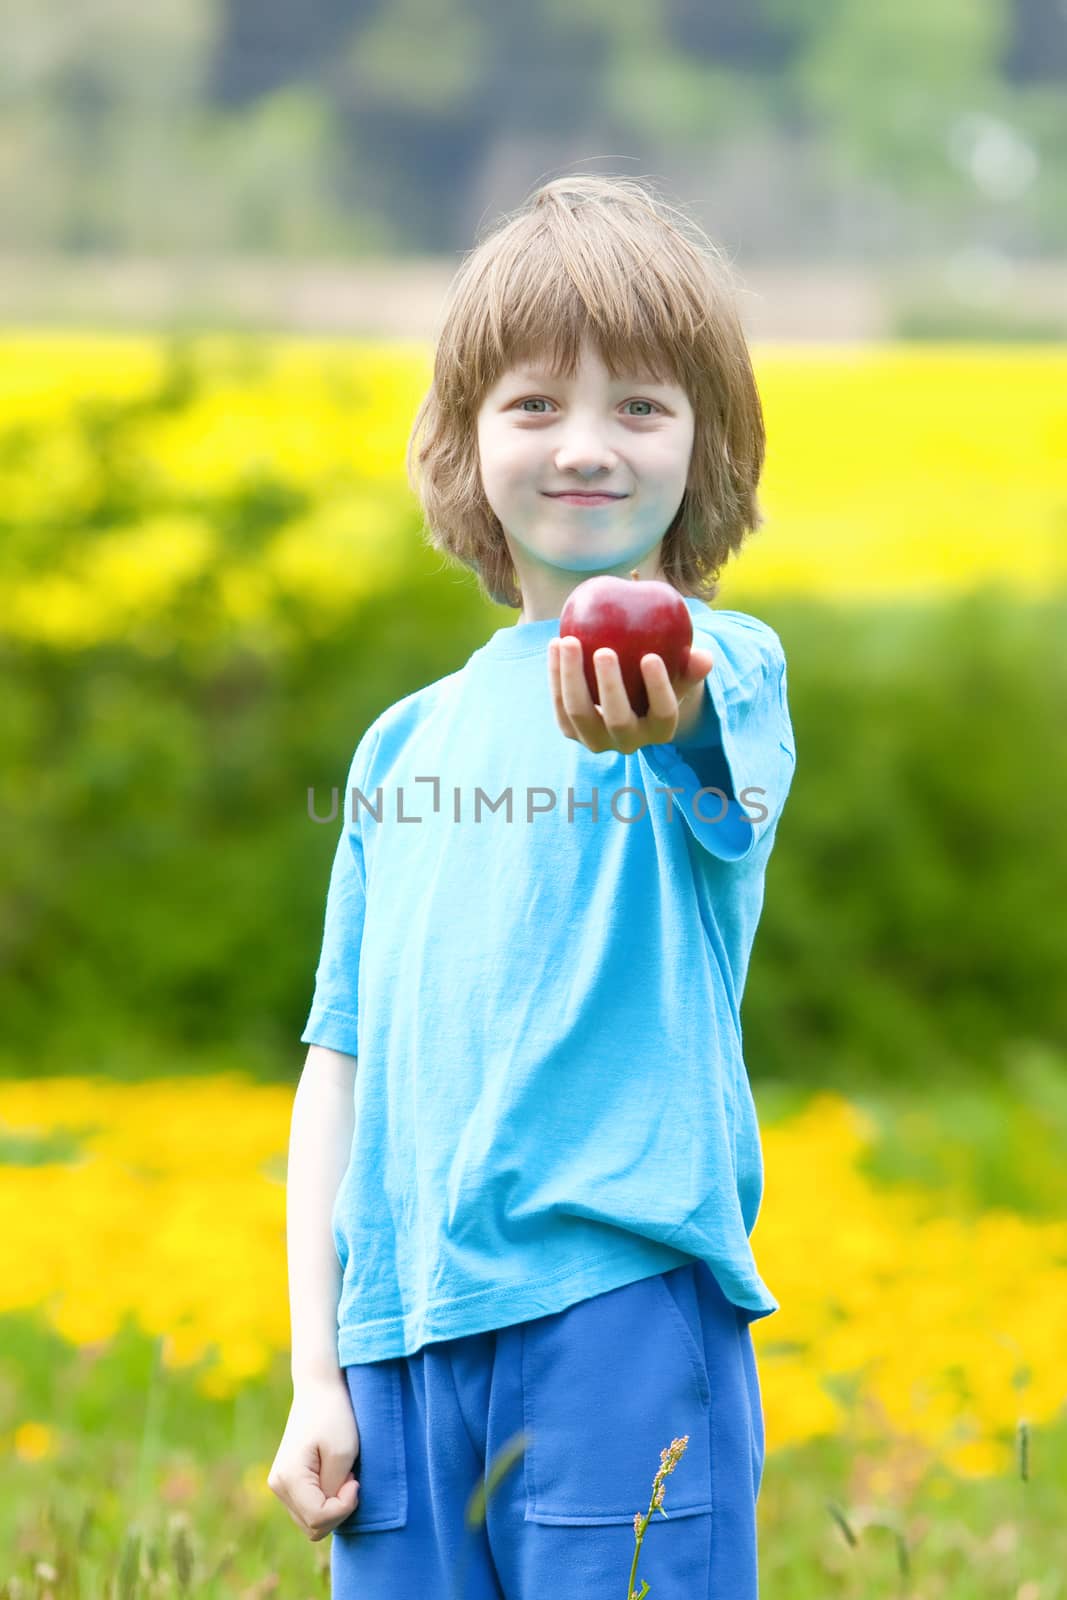 Boy Holding Red Apple in the Garden by courtyardpix